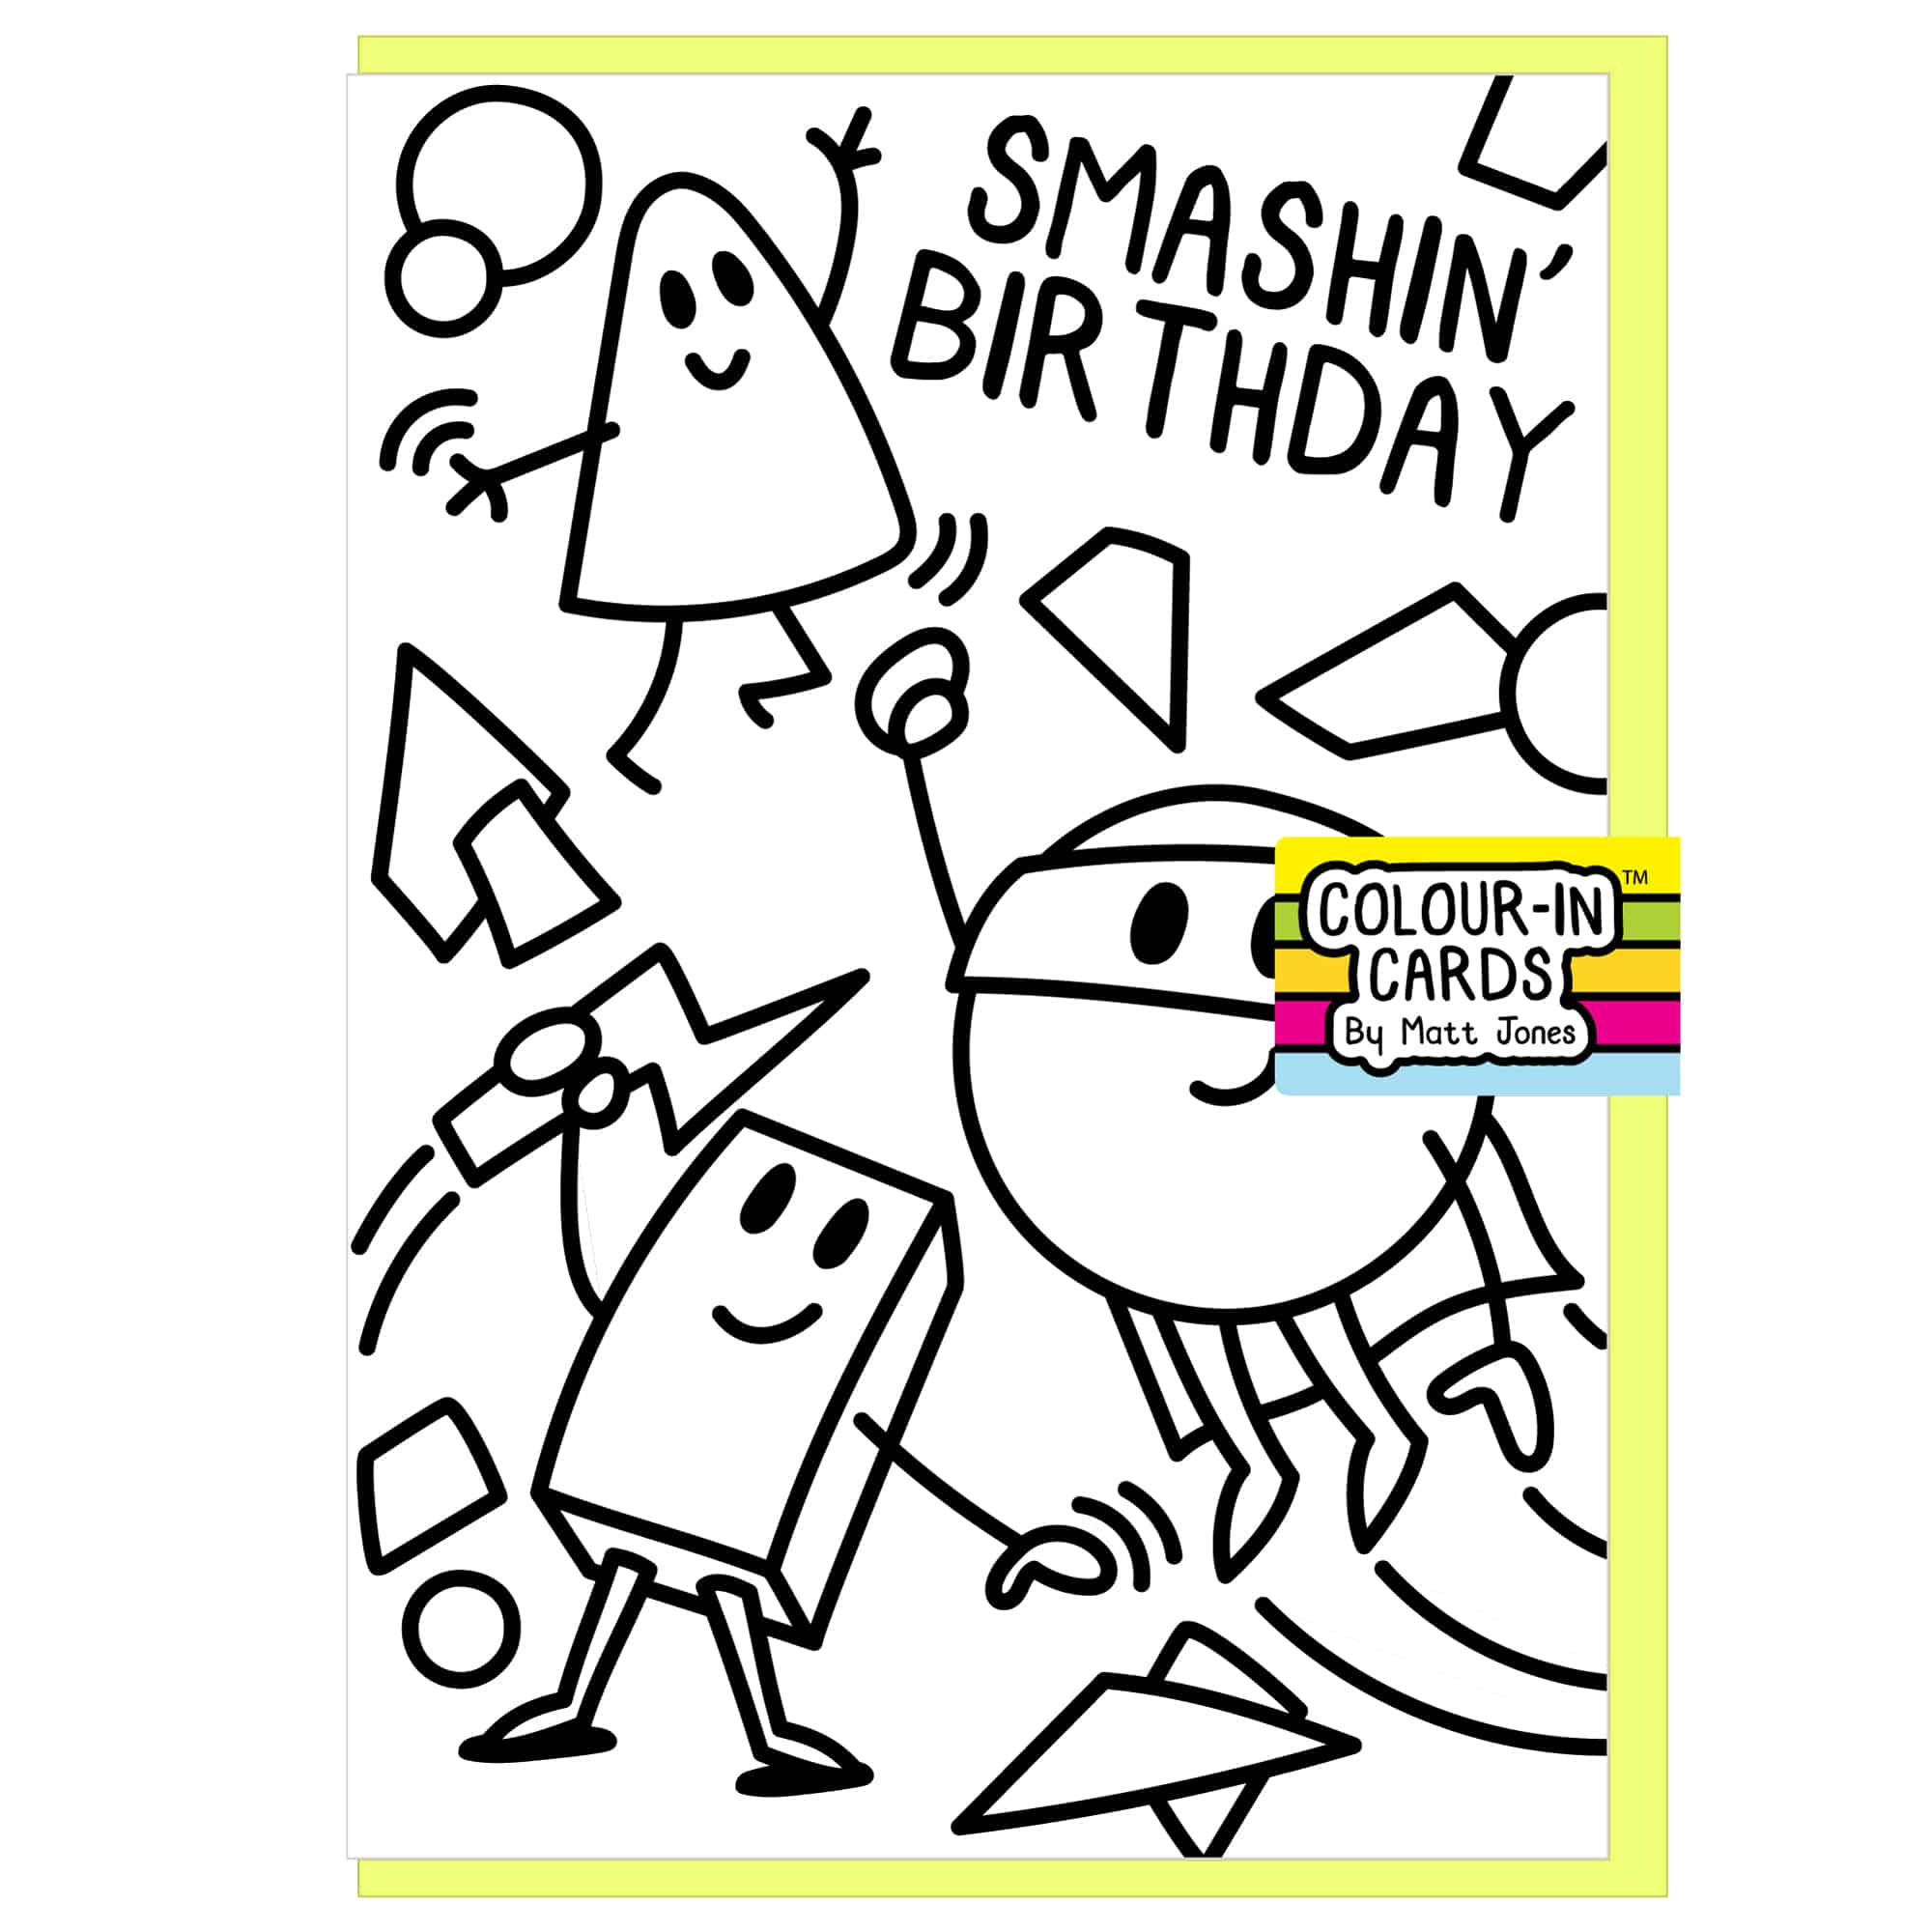 Smashing Birthday Colour in Card by Matt Jones Lunartik